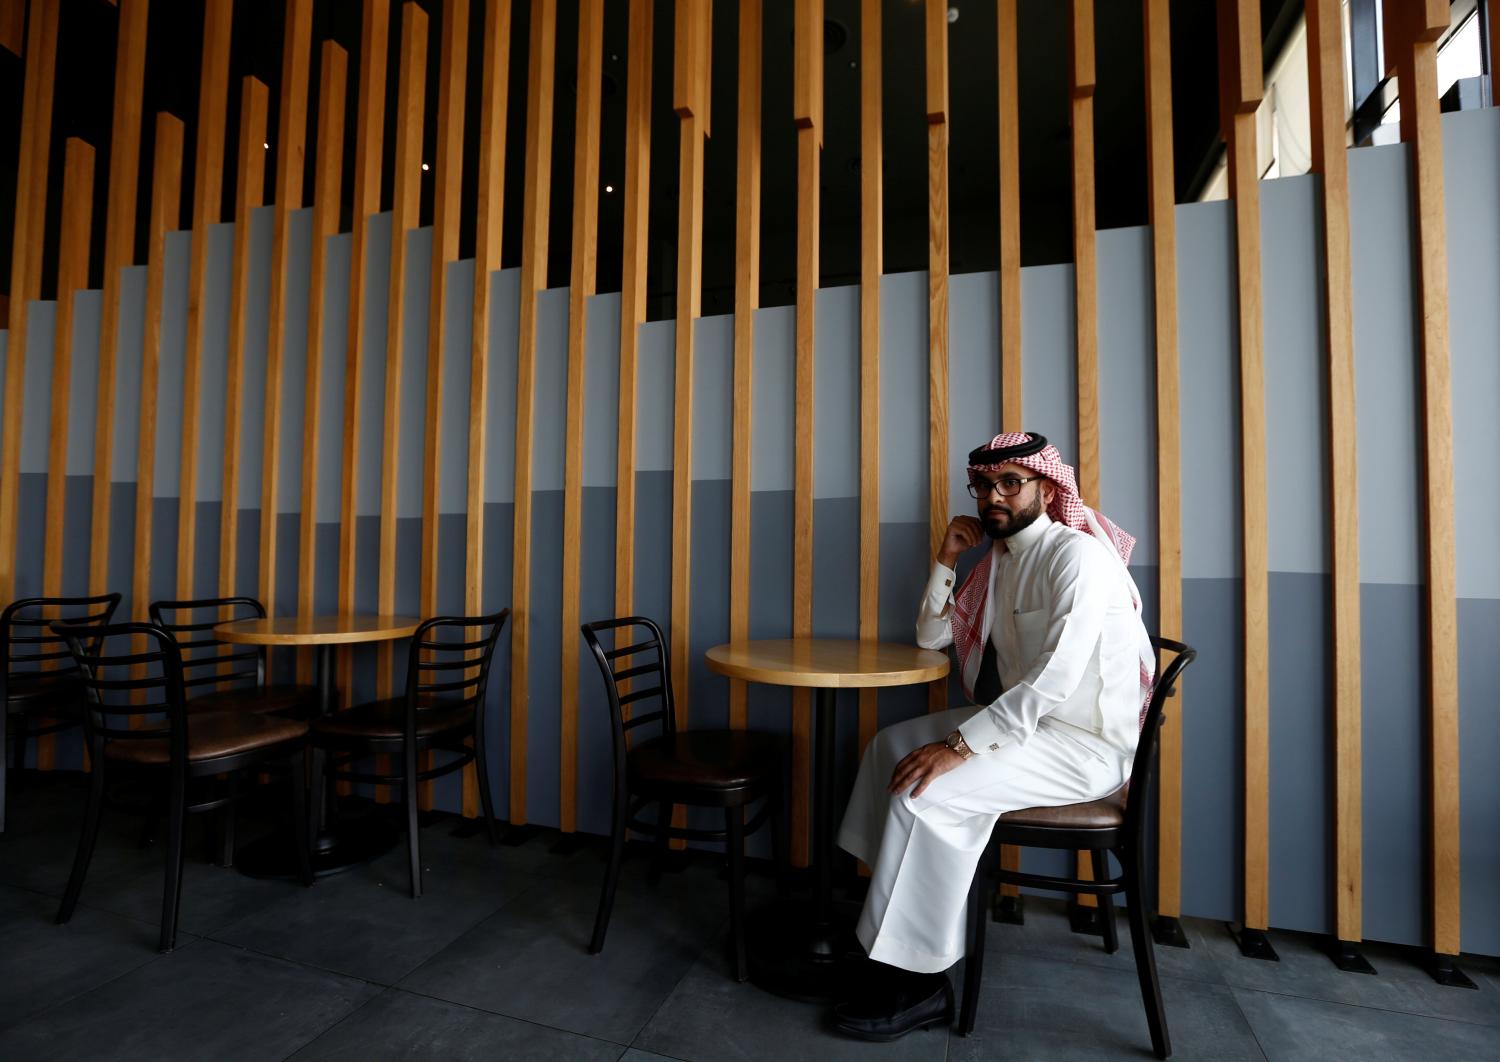 Nayef al-Hayzan, 28, poses for a photograph at a cafe in Riyadh, Saudi Arabia,